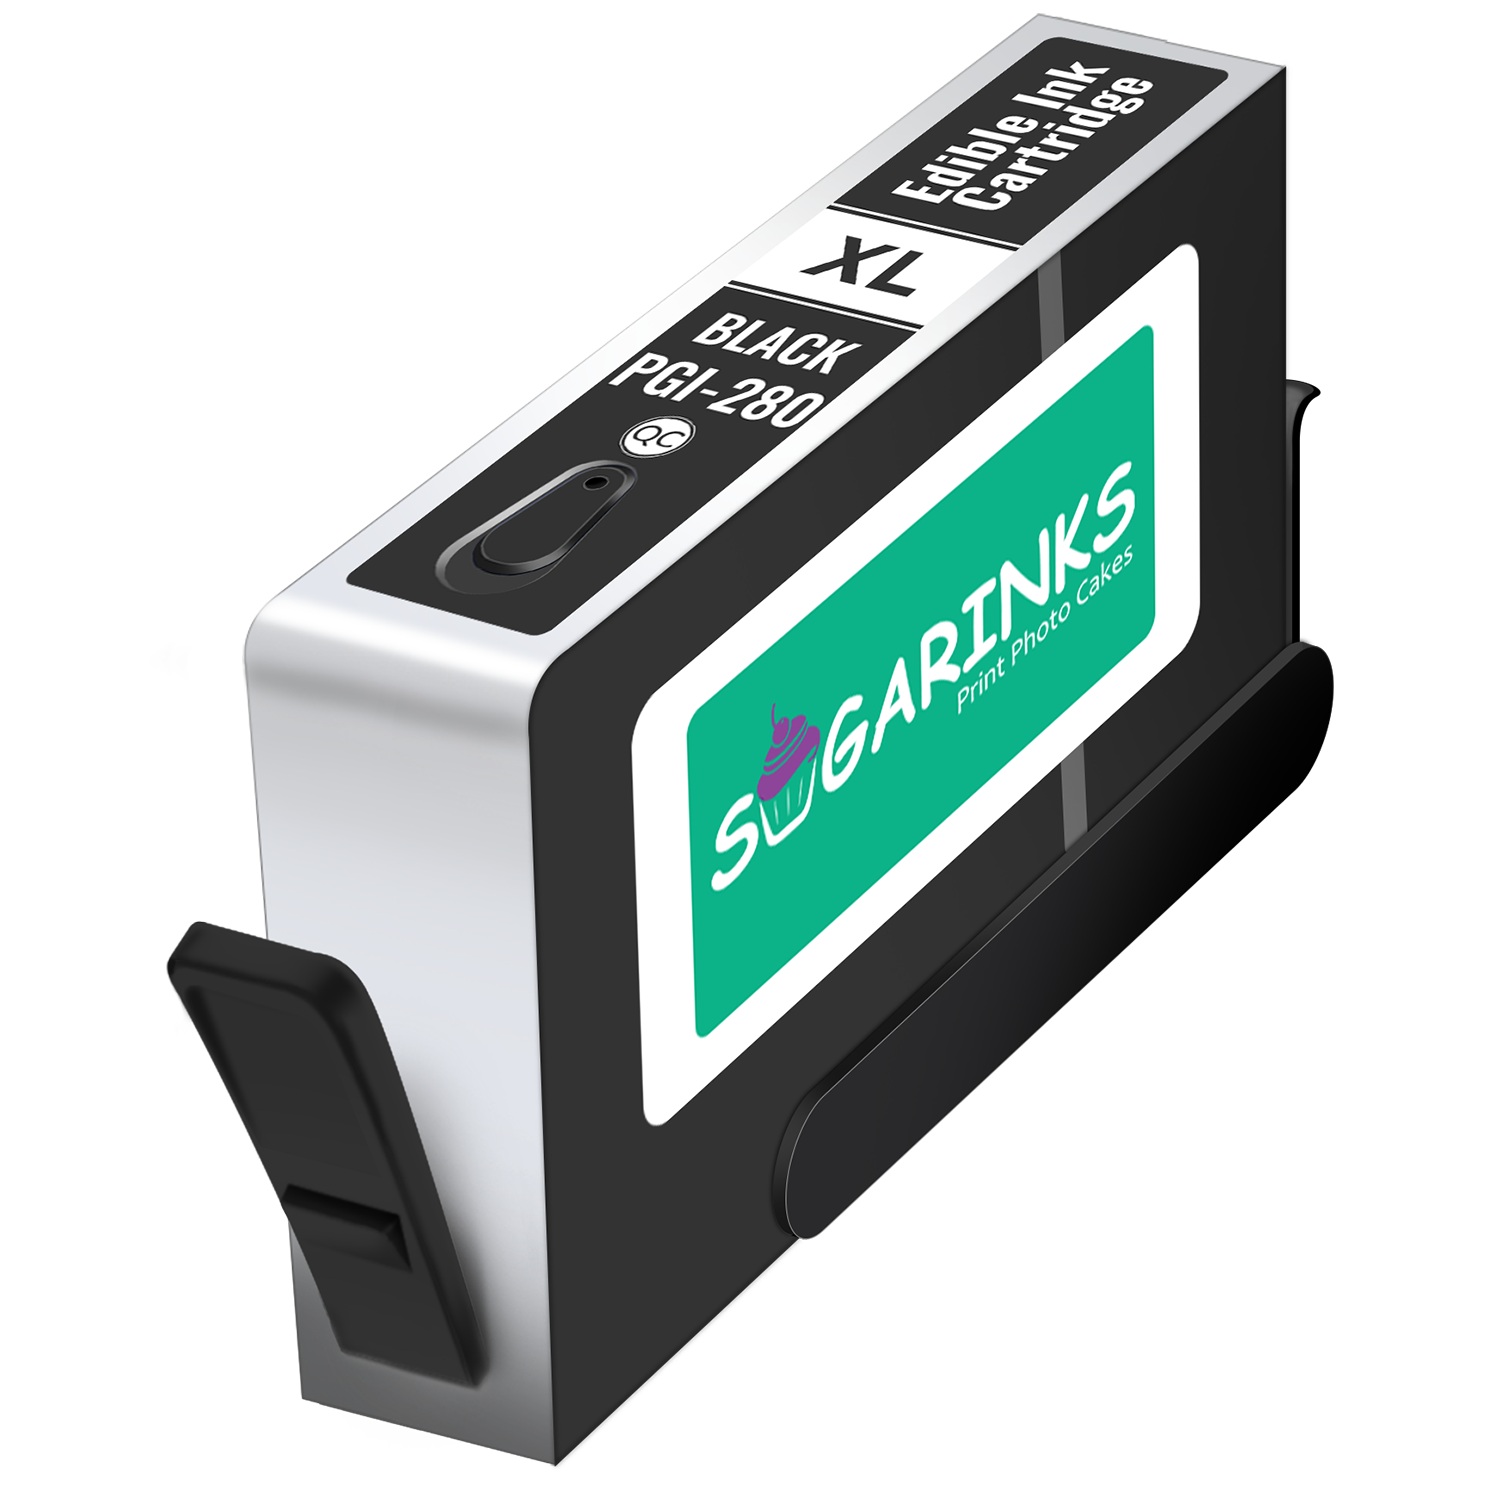 Sugarinks Edible Ink Cartridge PGI-280XL for Canon Edible Printers – Black